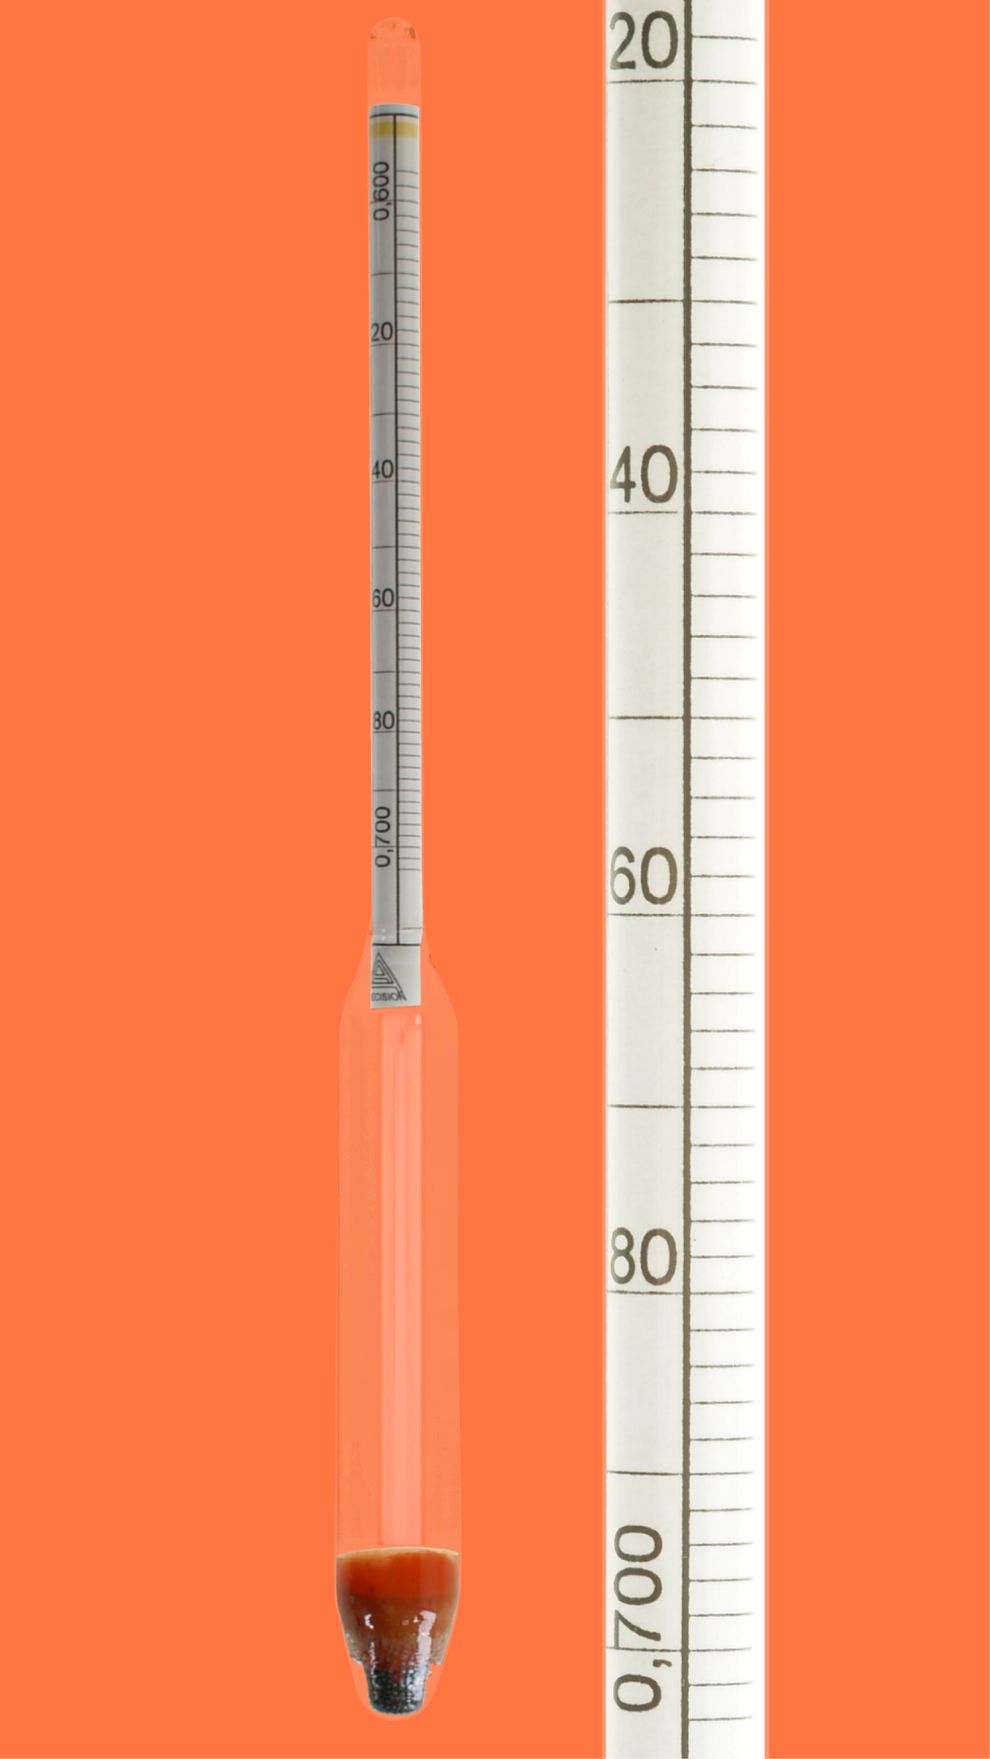 Aräometer, DIN 12791, M100, 1,70-1,80:0,0020g/cm³, Bezugstemp. 20°C, ohne Thermometer